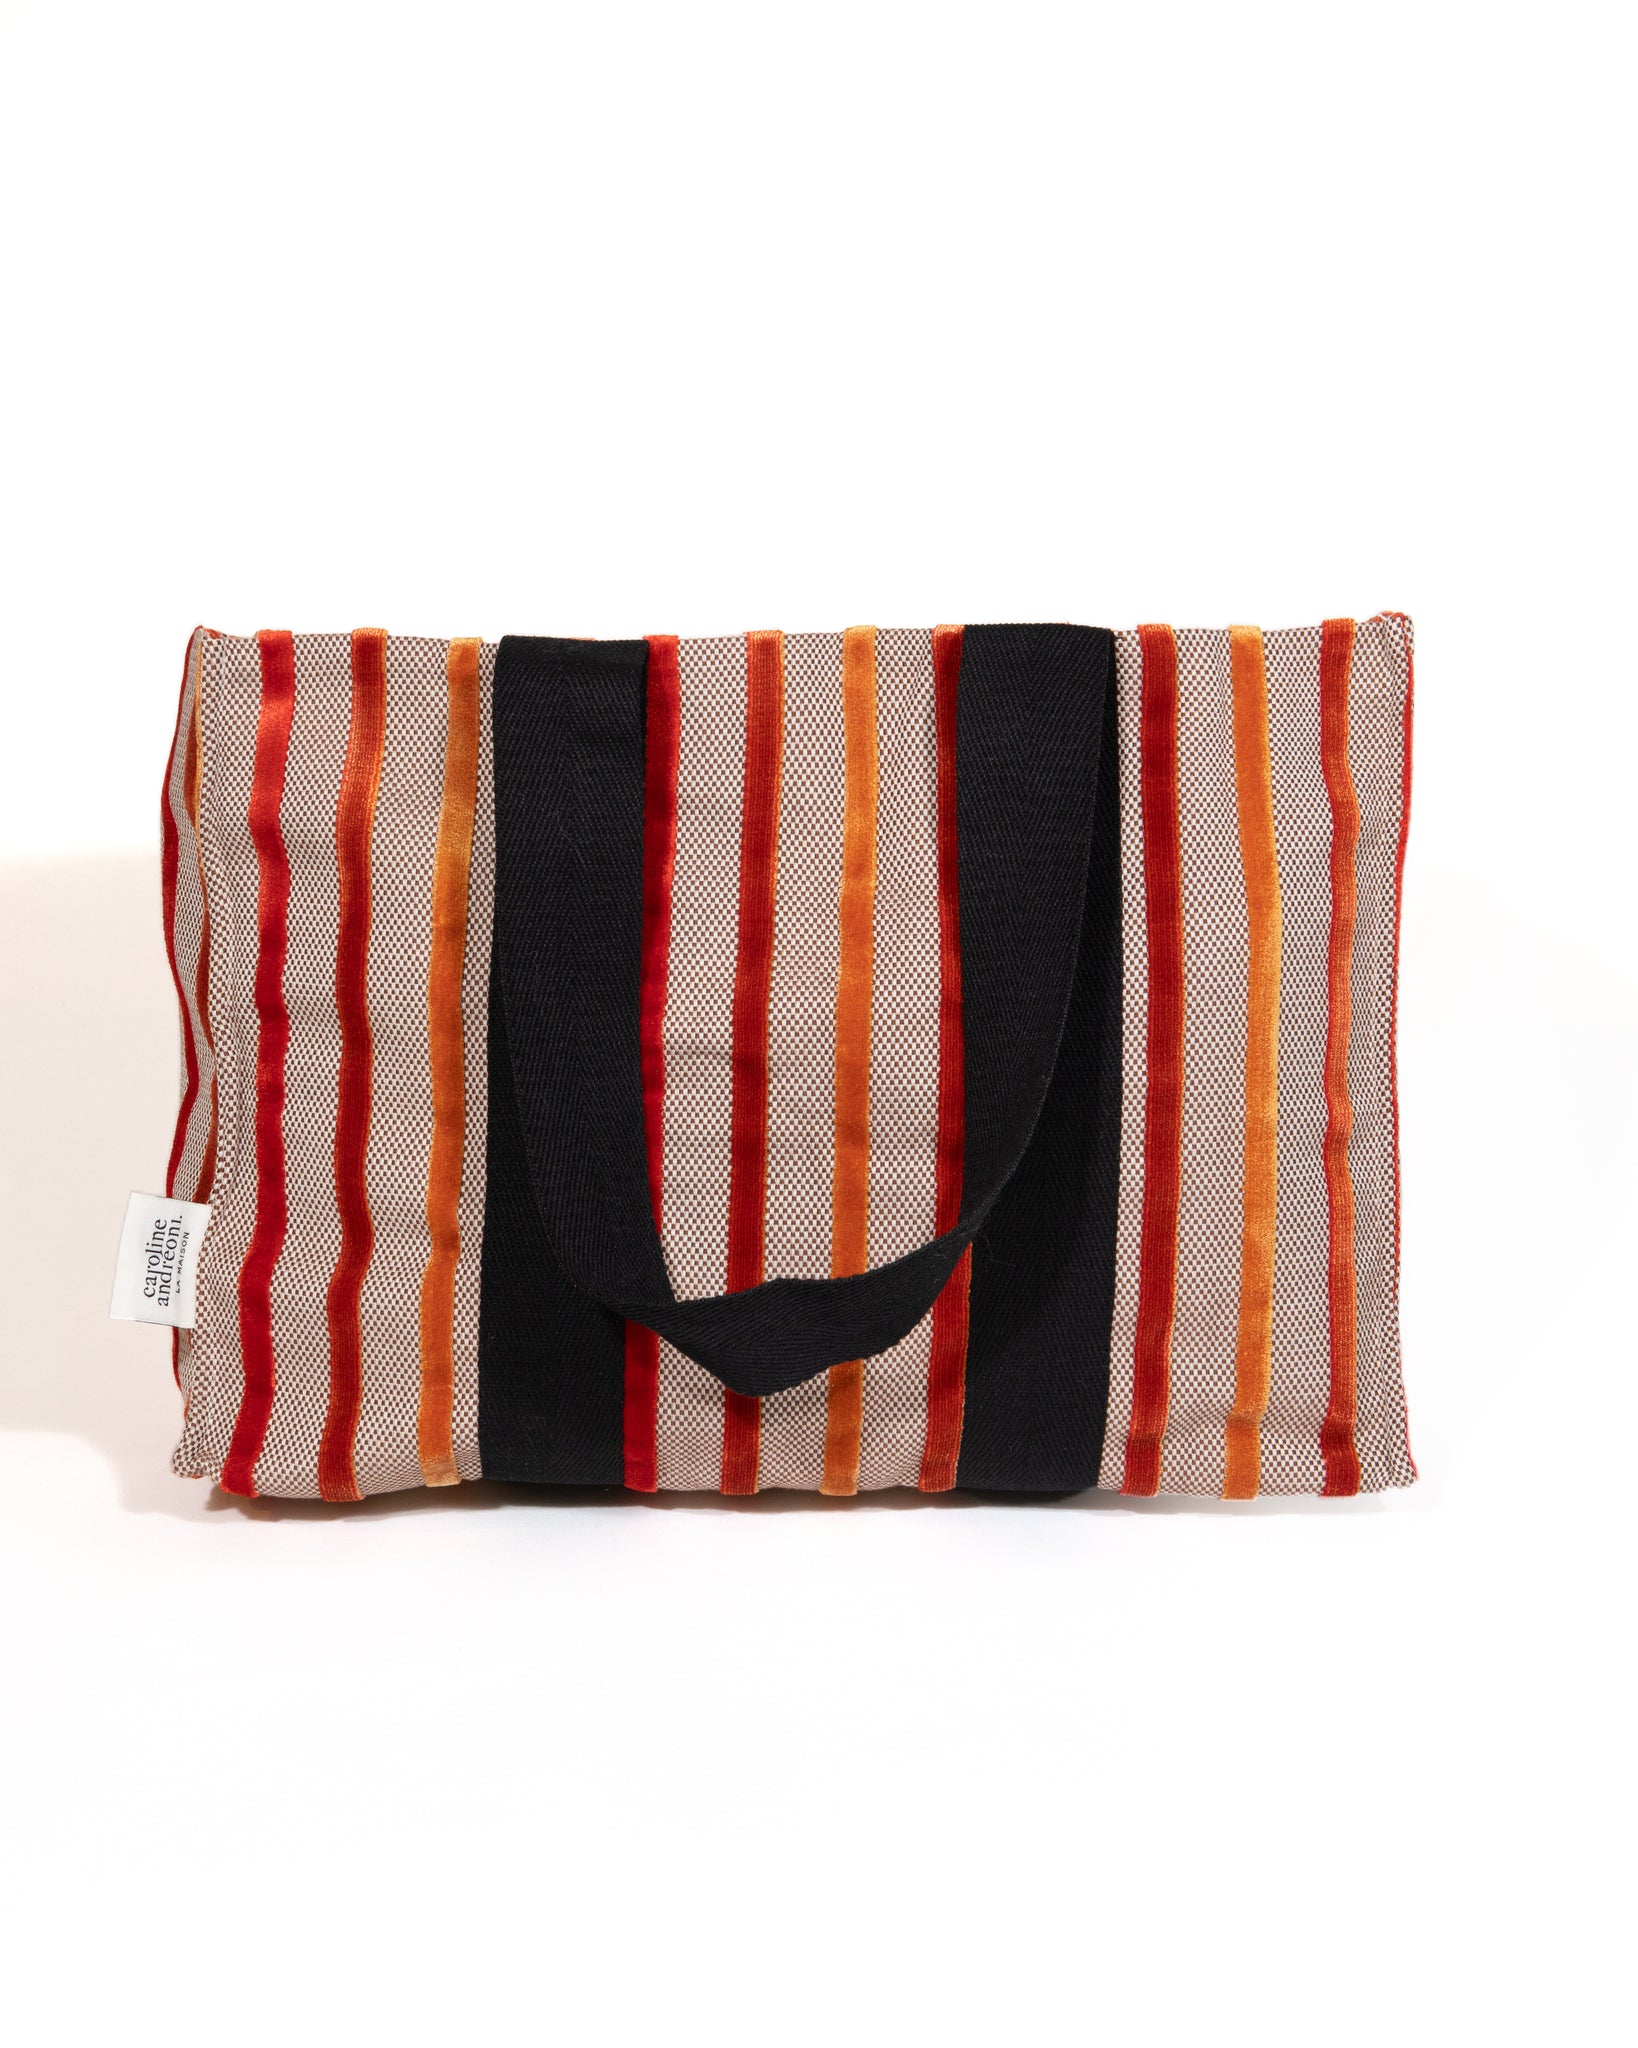 Ballia Upcyclé - Orange and red striped fabric 